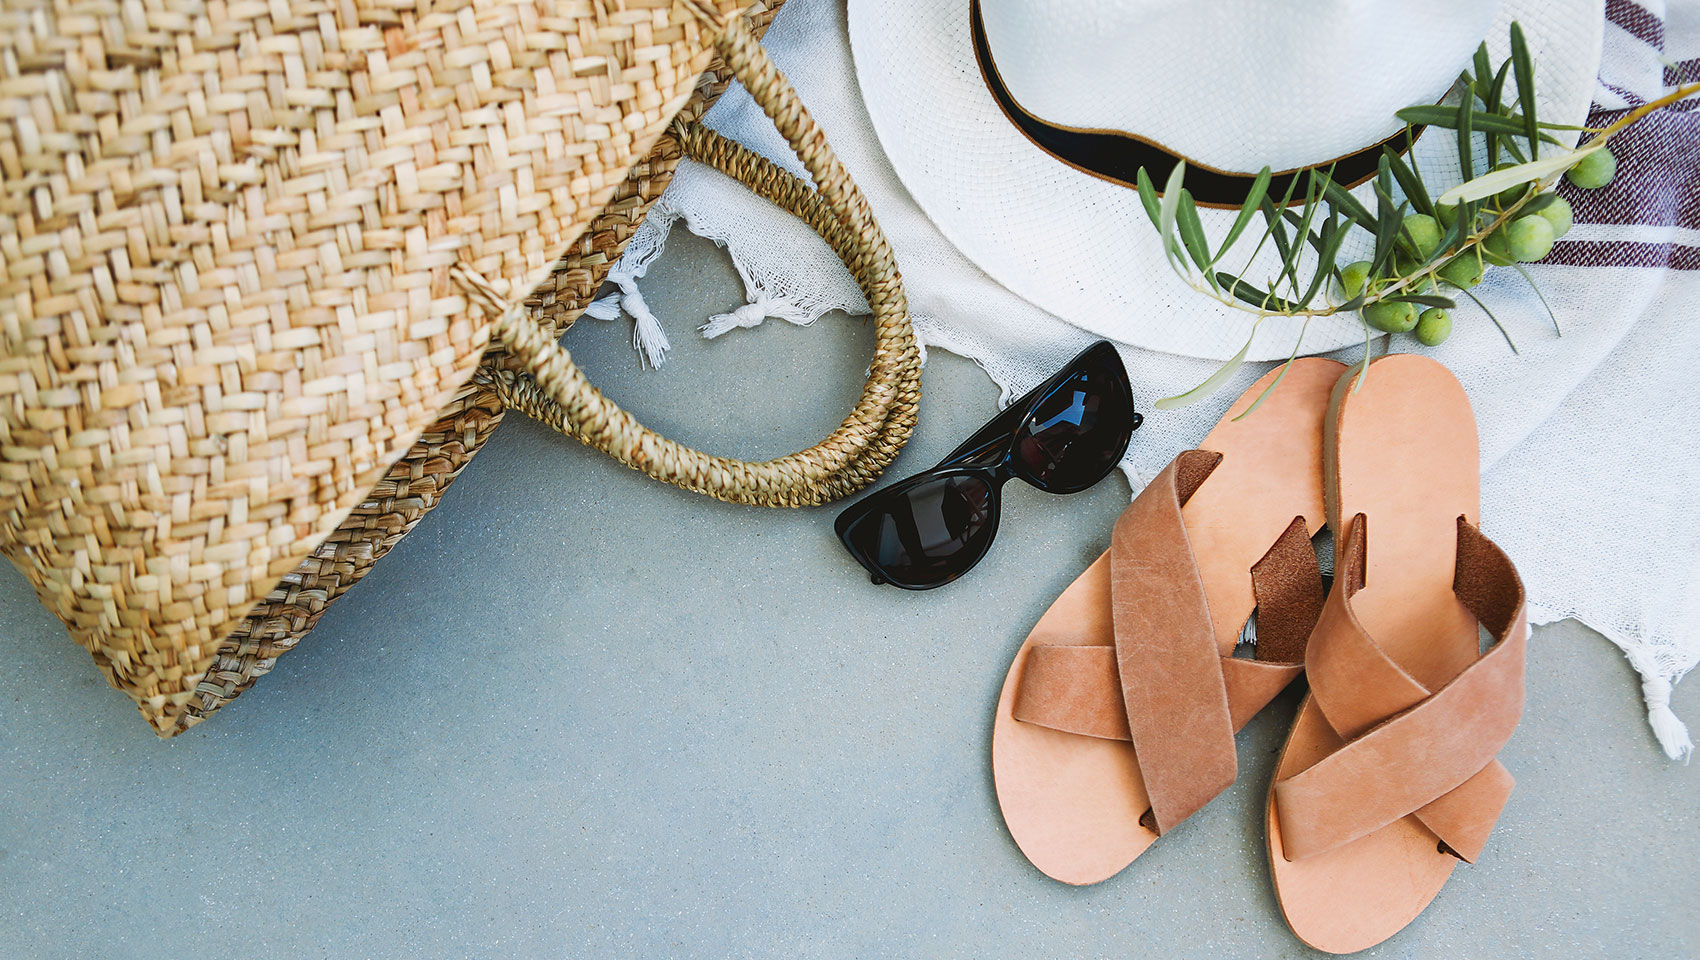 rattan bag, sunglasses, sandals, sun hat, picnic blanket, olives